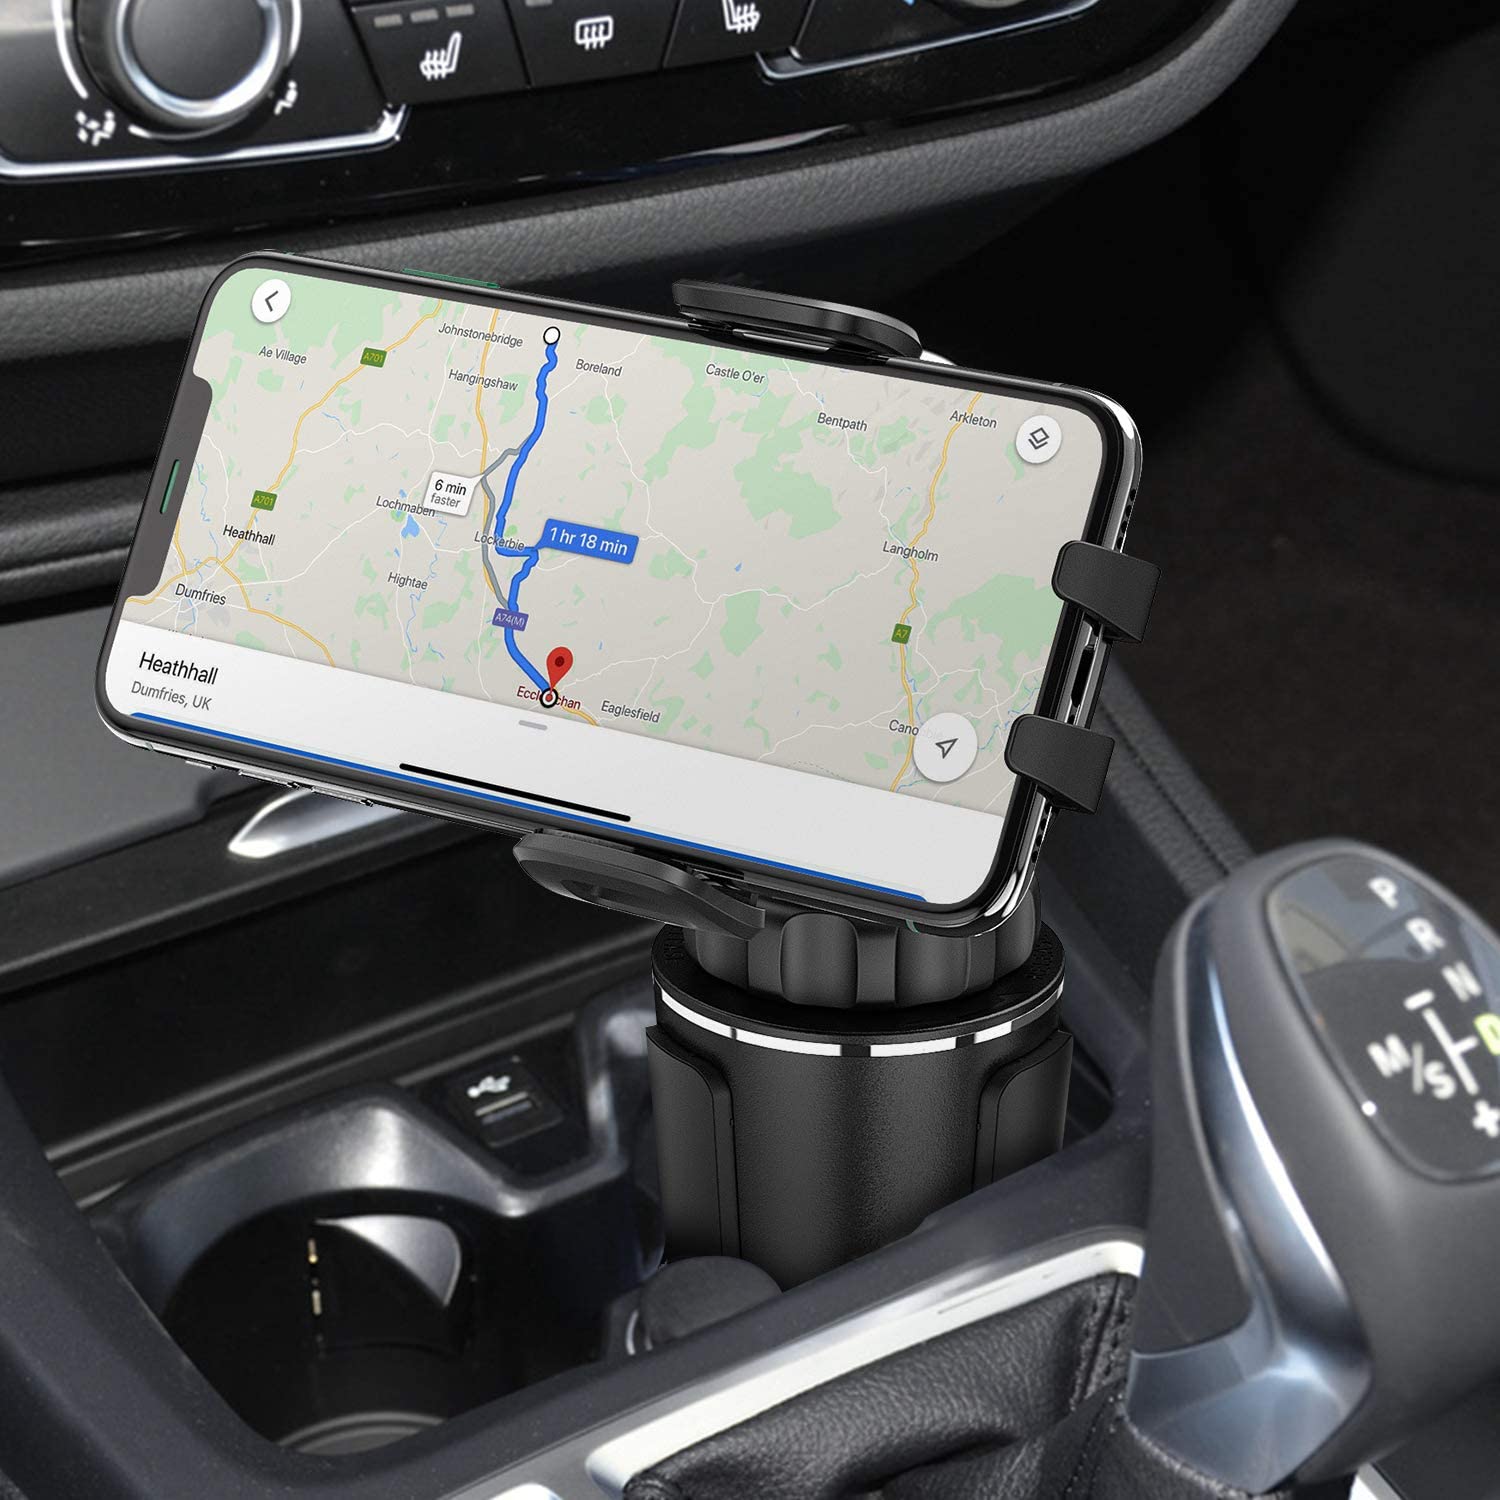 WixGear Cup Holder Phone Mount,Car Cup Holder Phone Mount Adjustable Automobile Cup Holder Smart Phone Cradle Car Mount